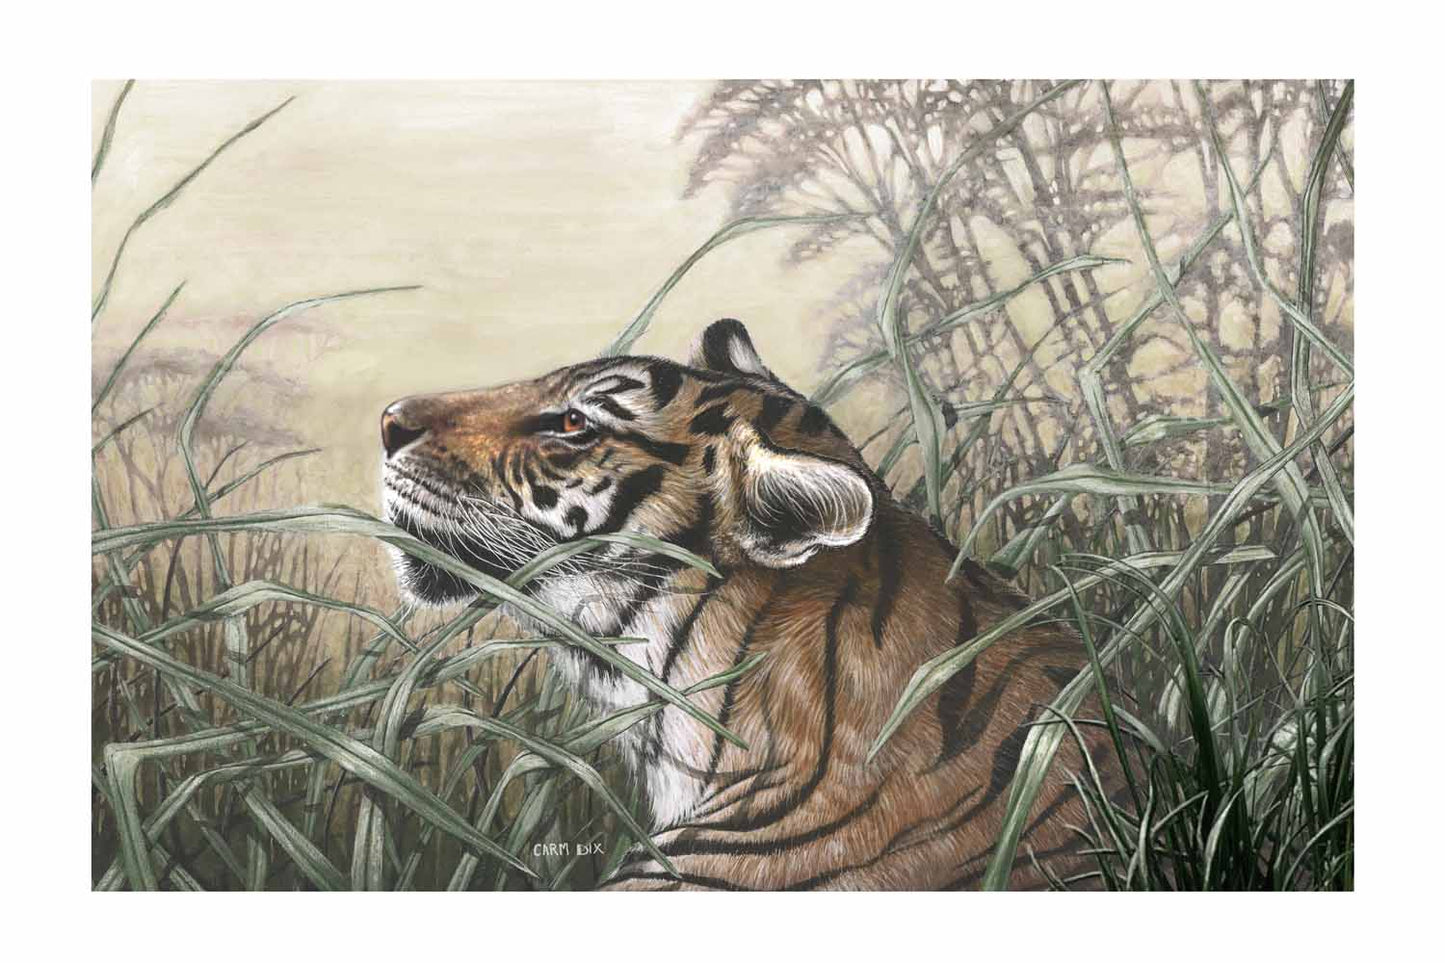 Tiger art print by artist Carm Dix